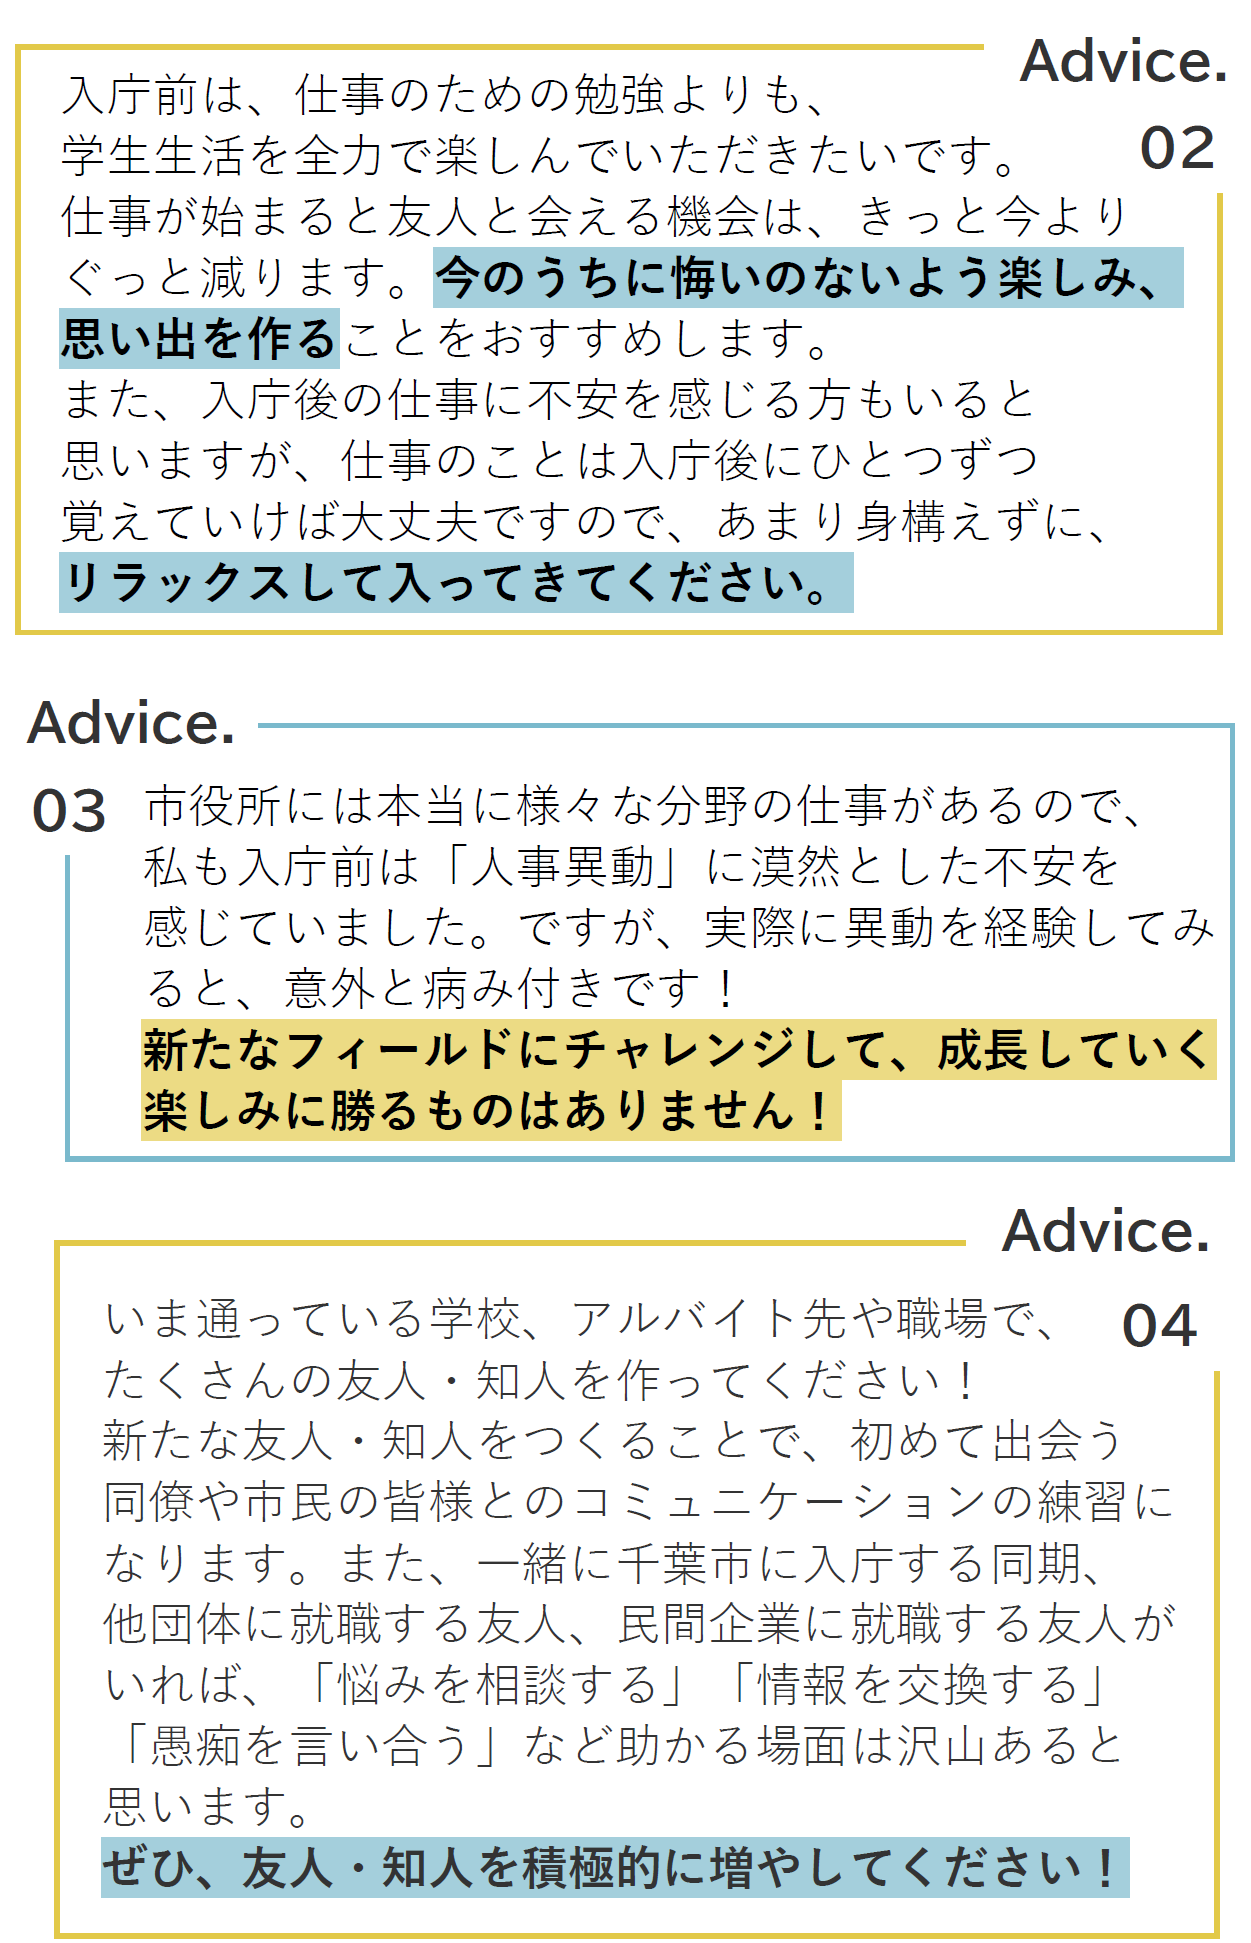 advice-02